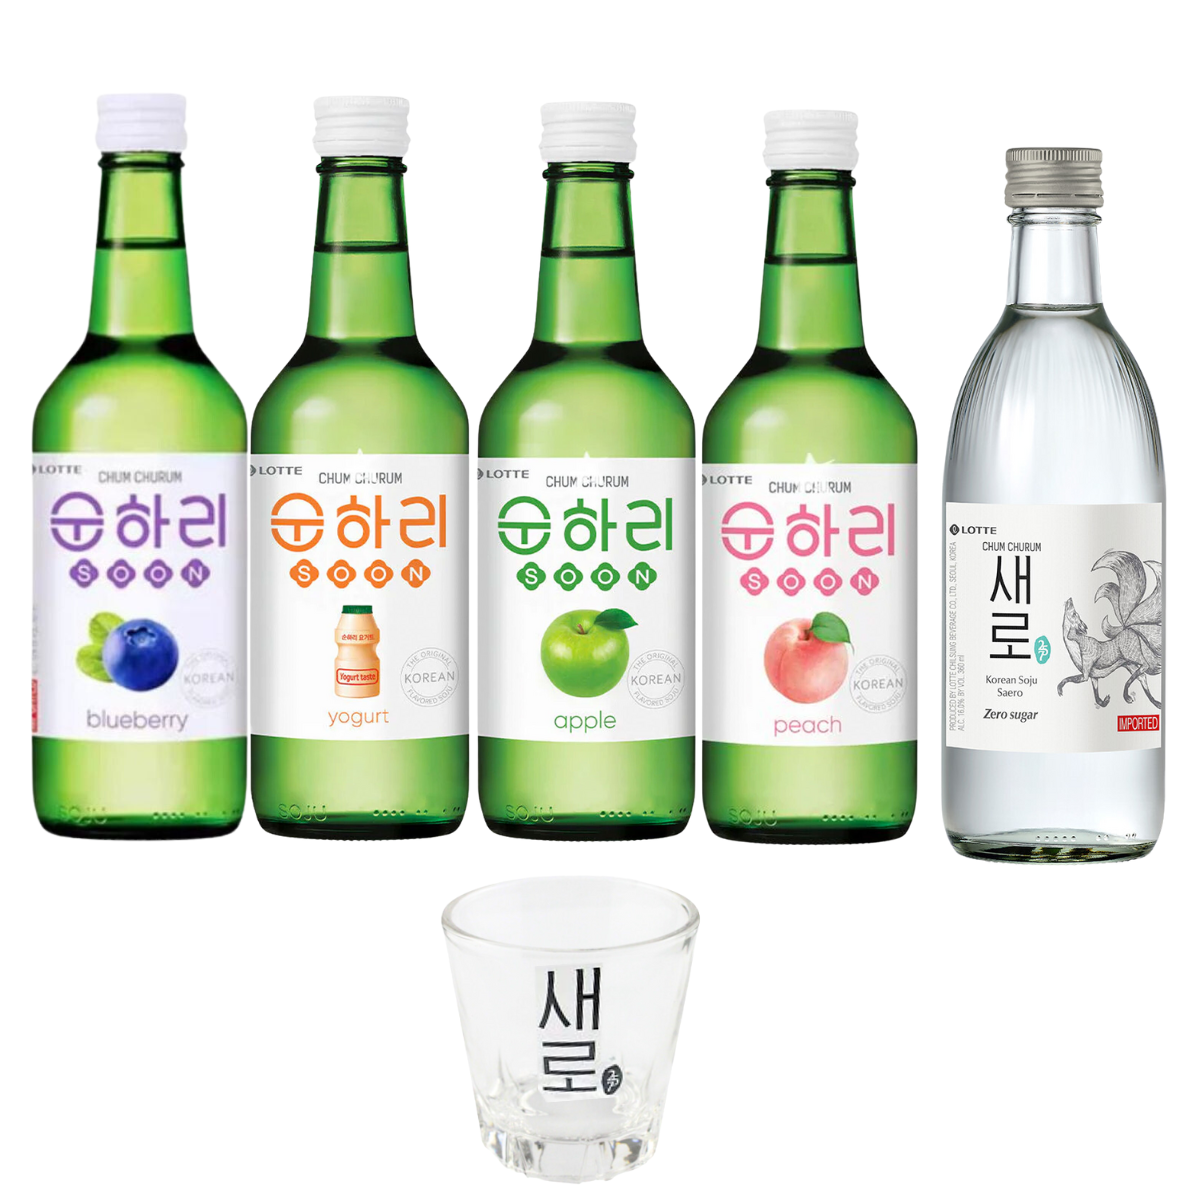 Kit 5 Soju Bebida Coreana Chum-churum Importado 4 Sabores + 1 Soju Saero - COPO